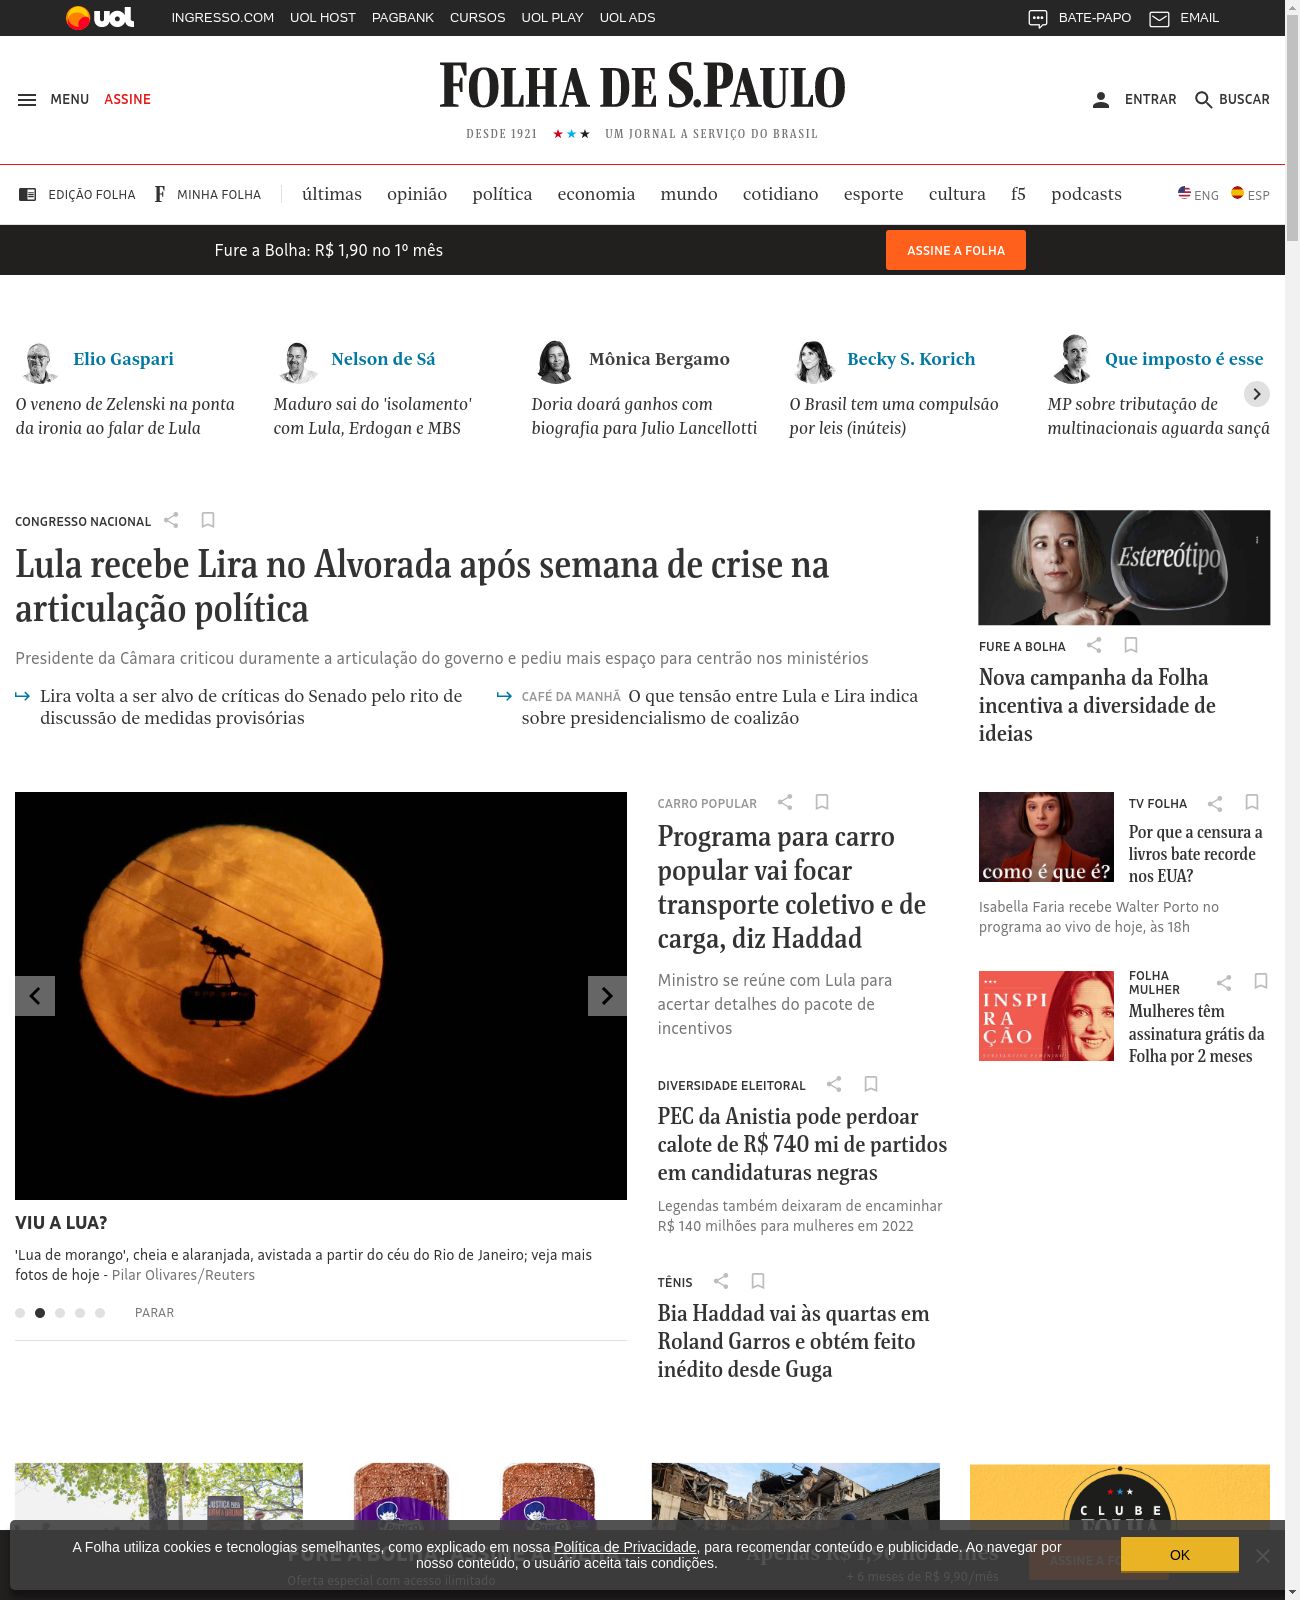 Folha de S.Paulo at 2023-06-05 10:45:03-03:00 local time